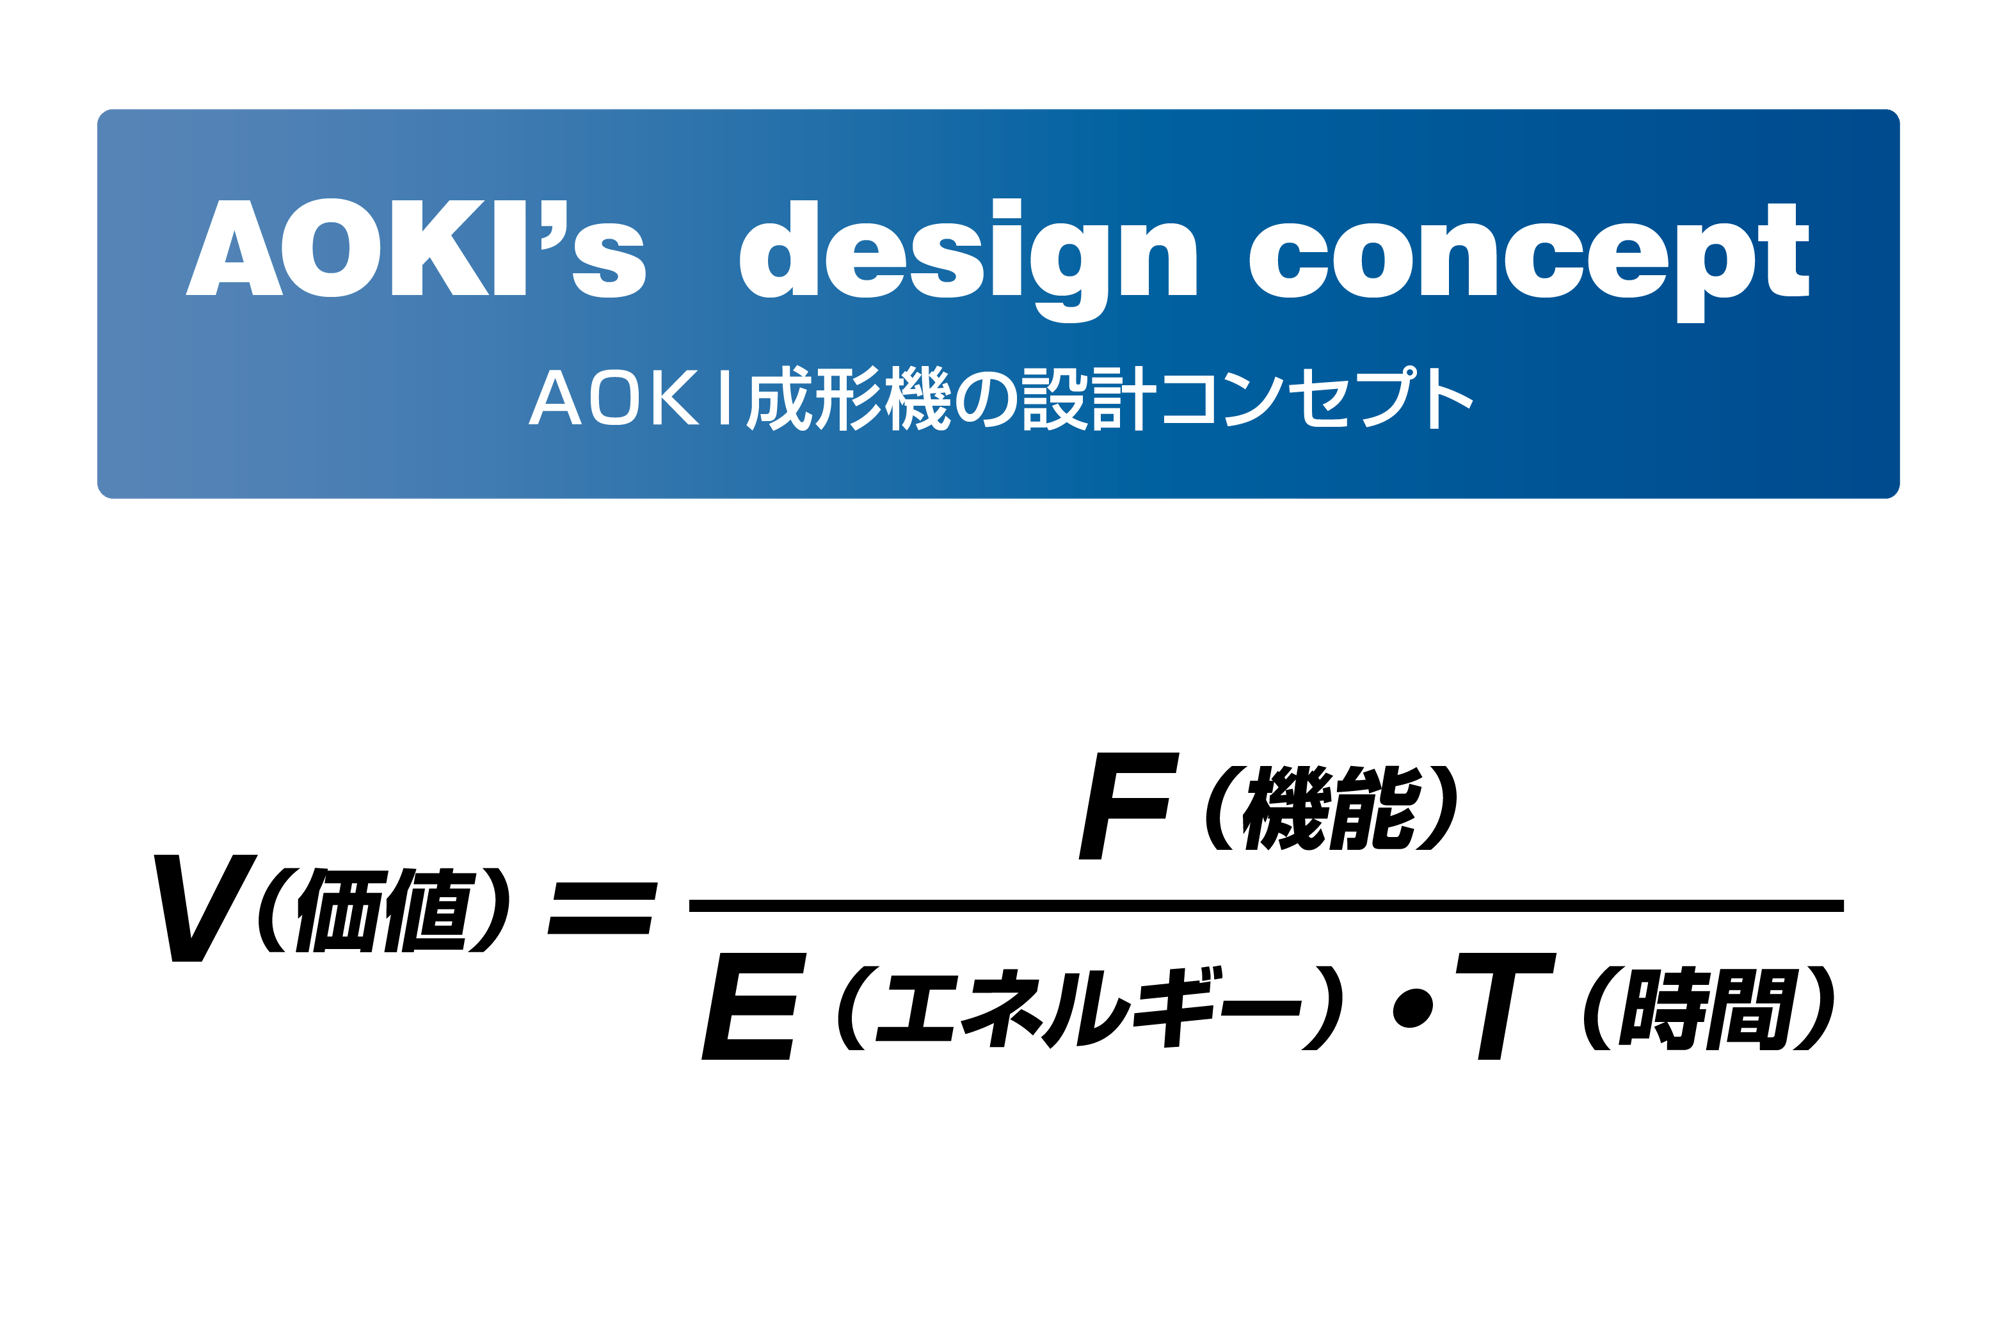 aoki_design_concept_002-01